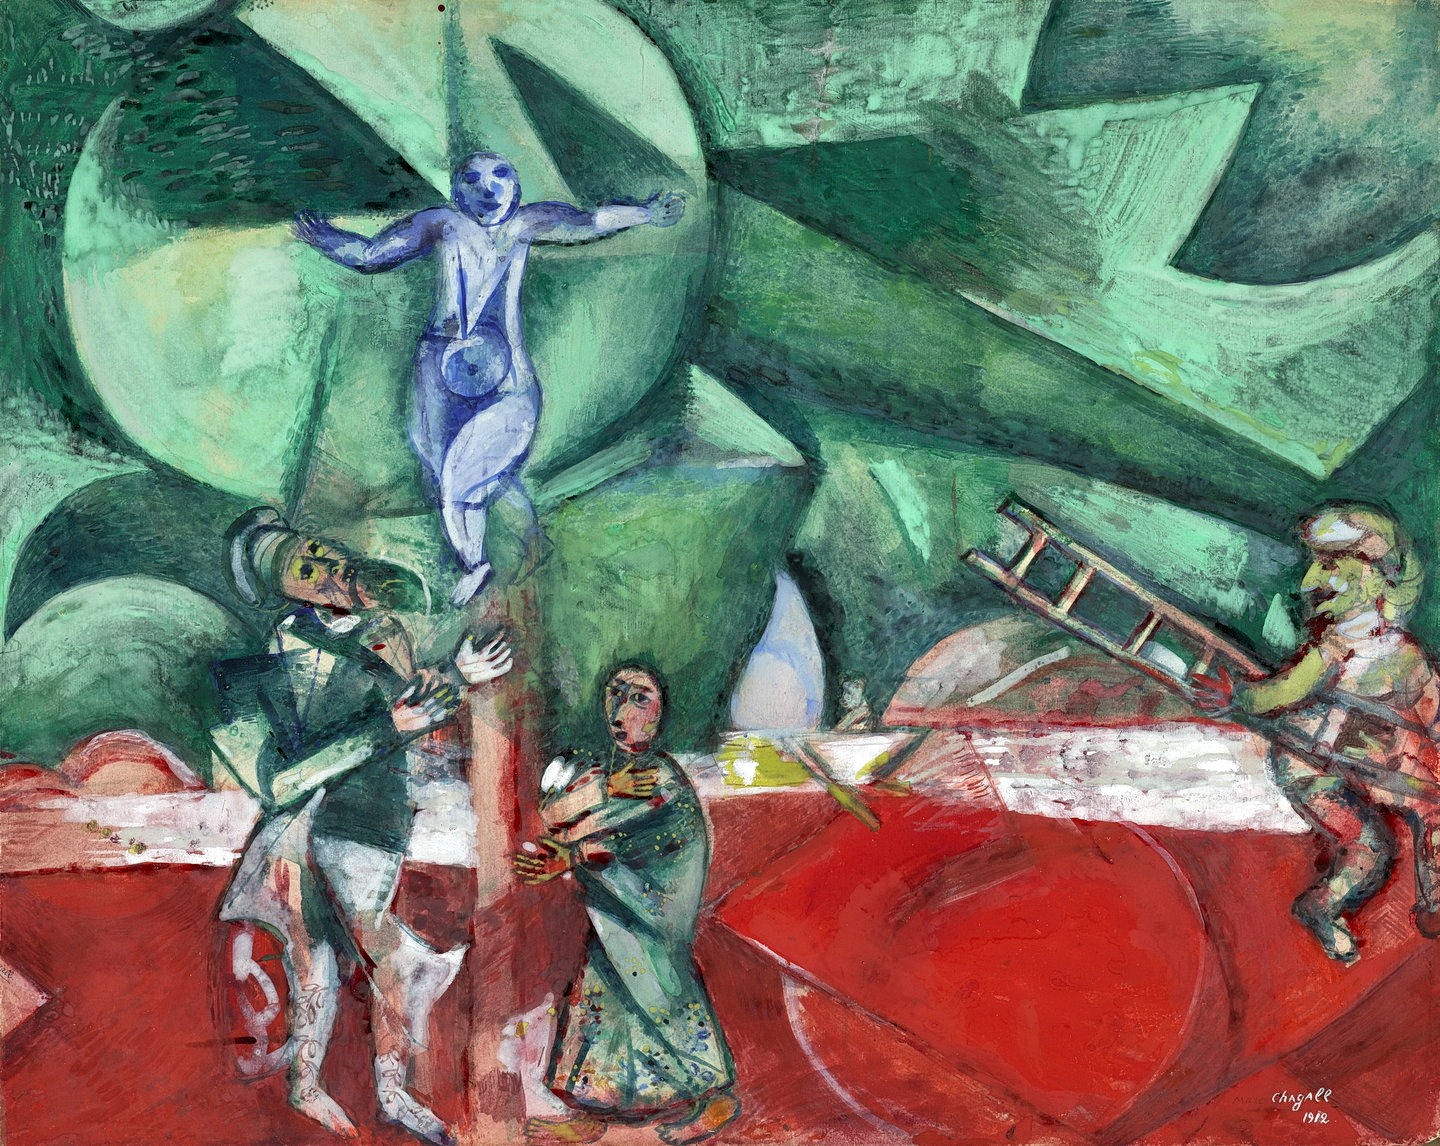 Marc+Chagall-1887-1985 (238).jpg